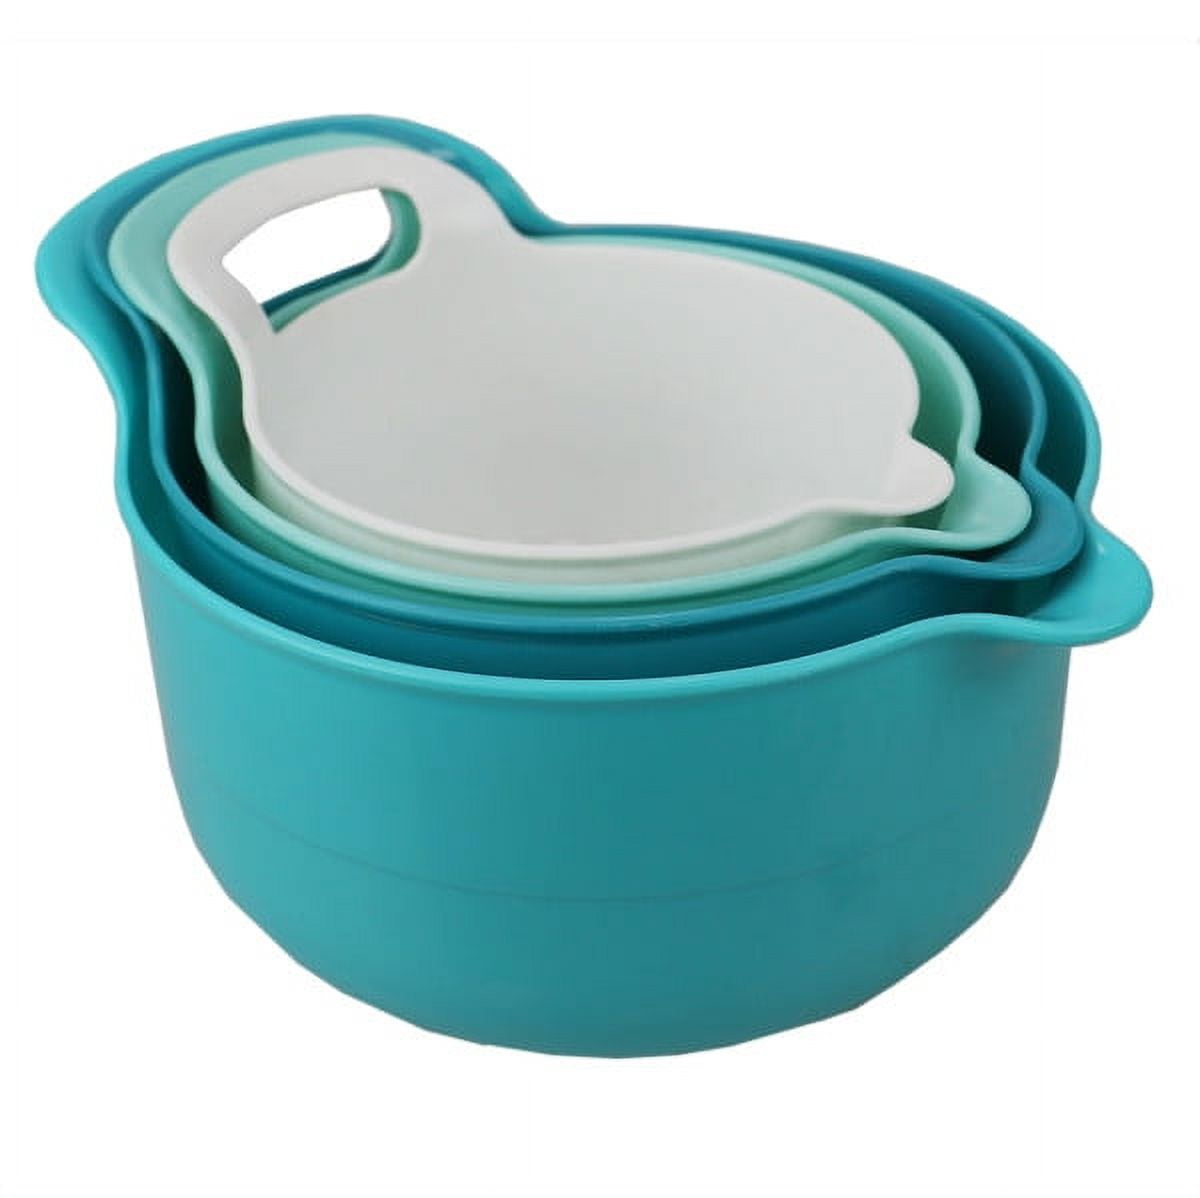 Home Basics 5 Piece Glass Bowl Set with Plastic Colorful Lids